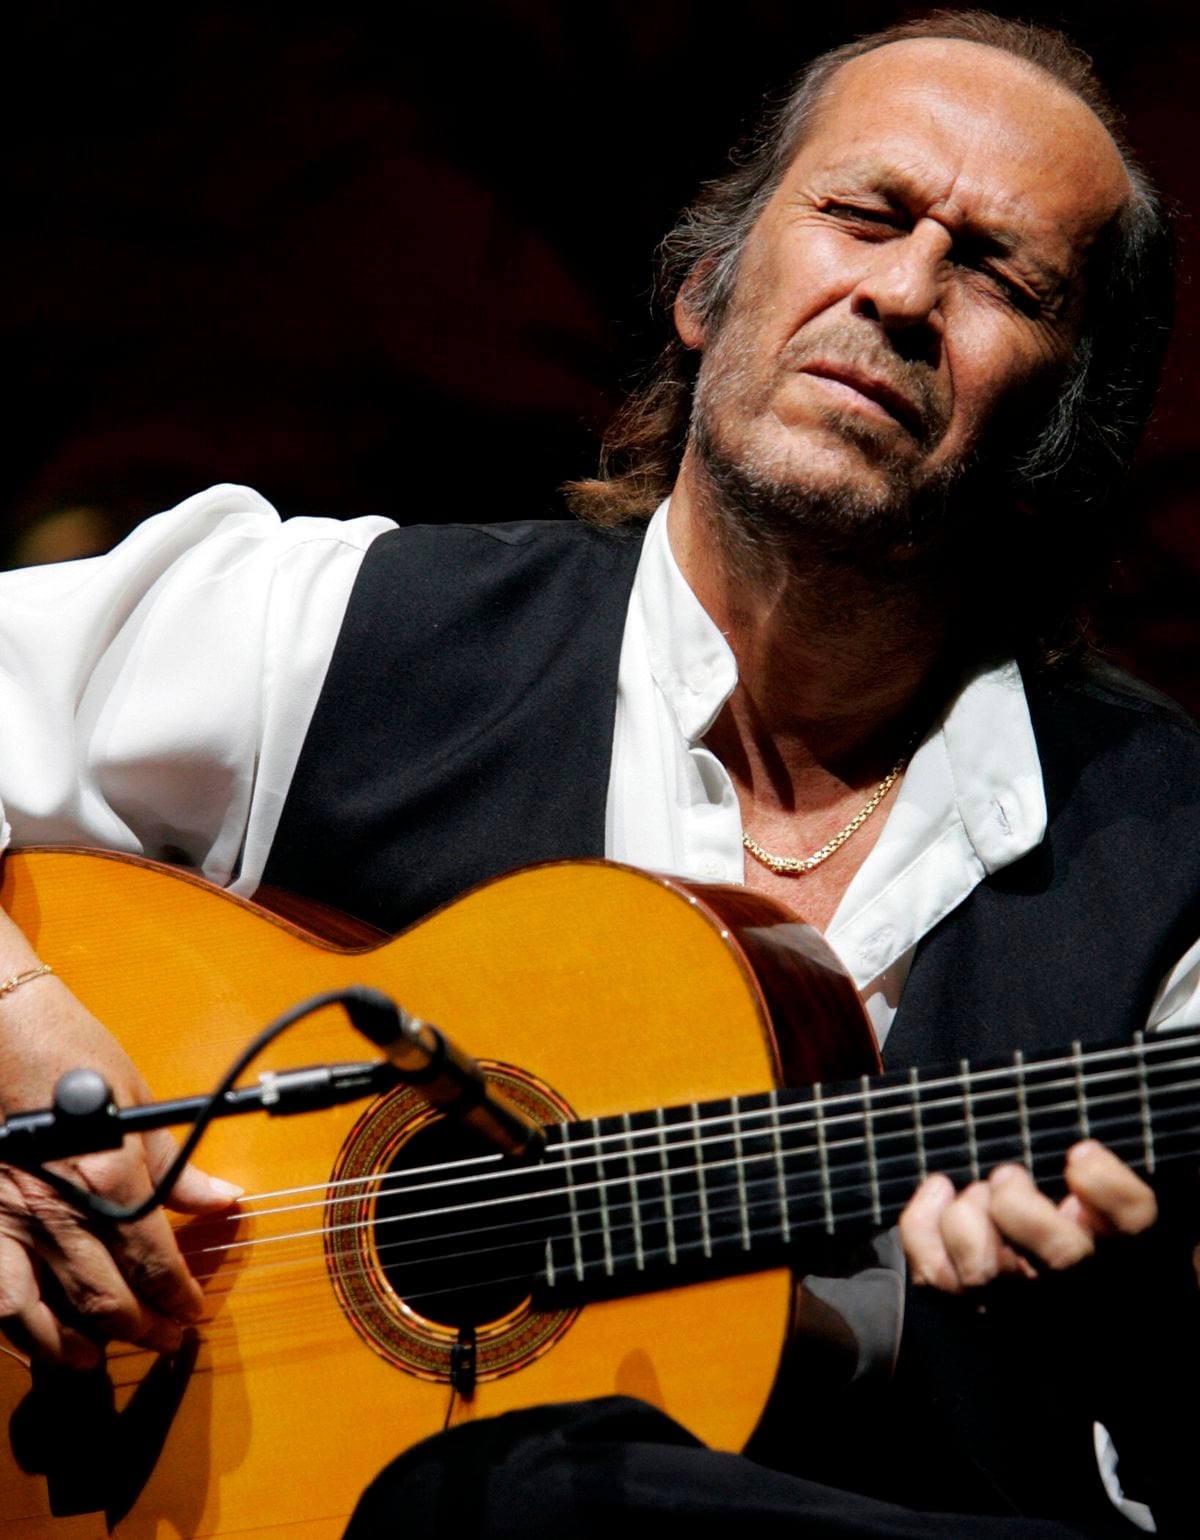 Испанский гитарист Пако де Лусия